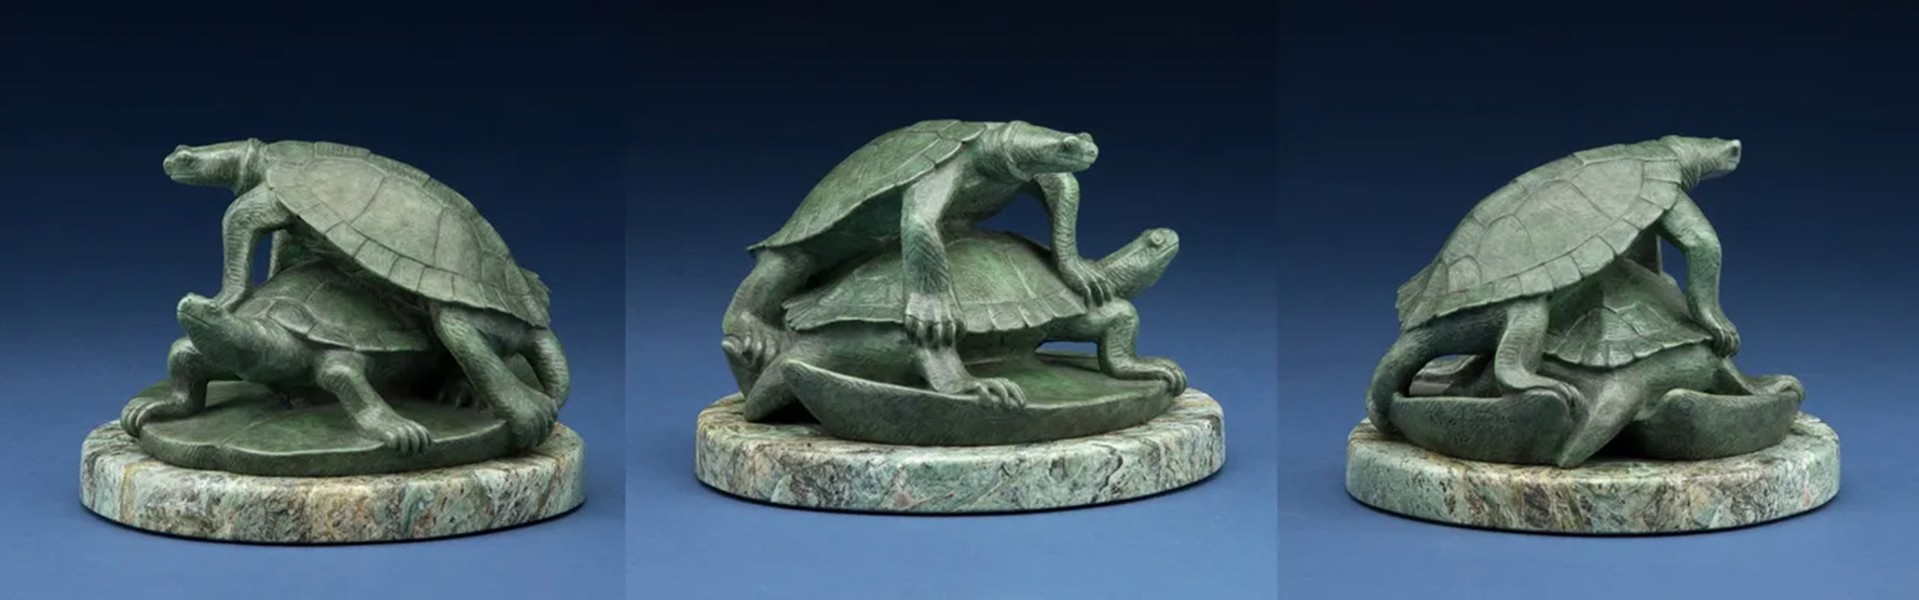 Turtle Pad by Tony Hochstetler